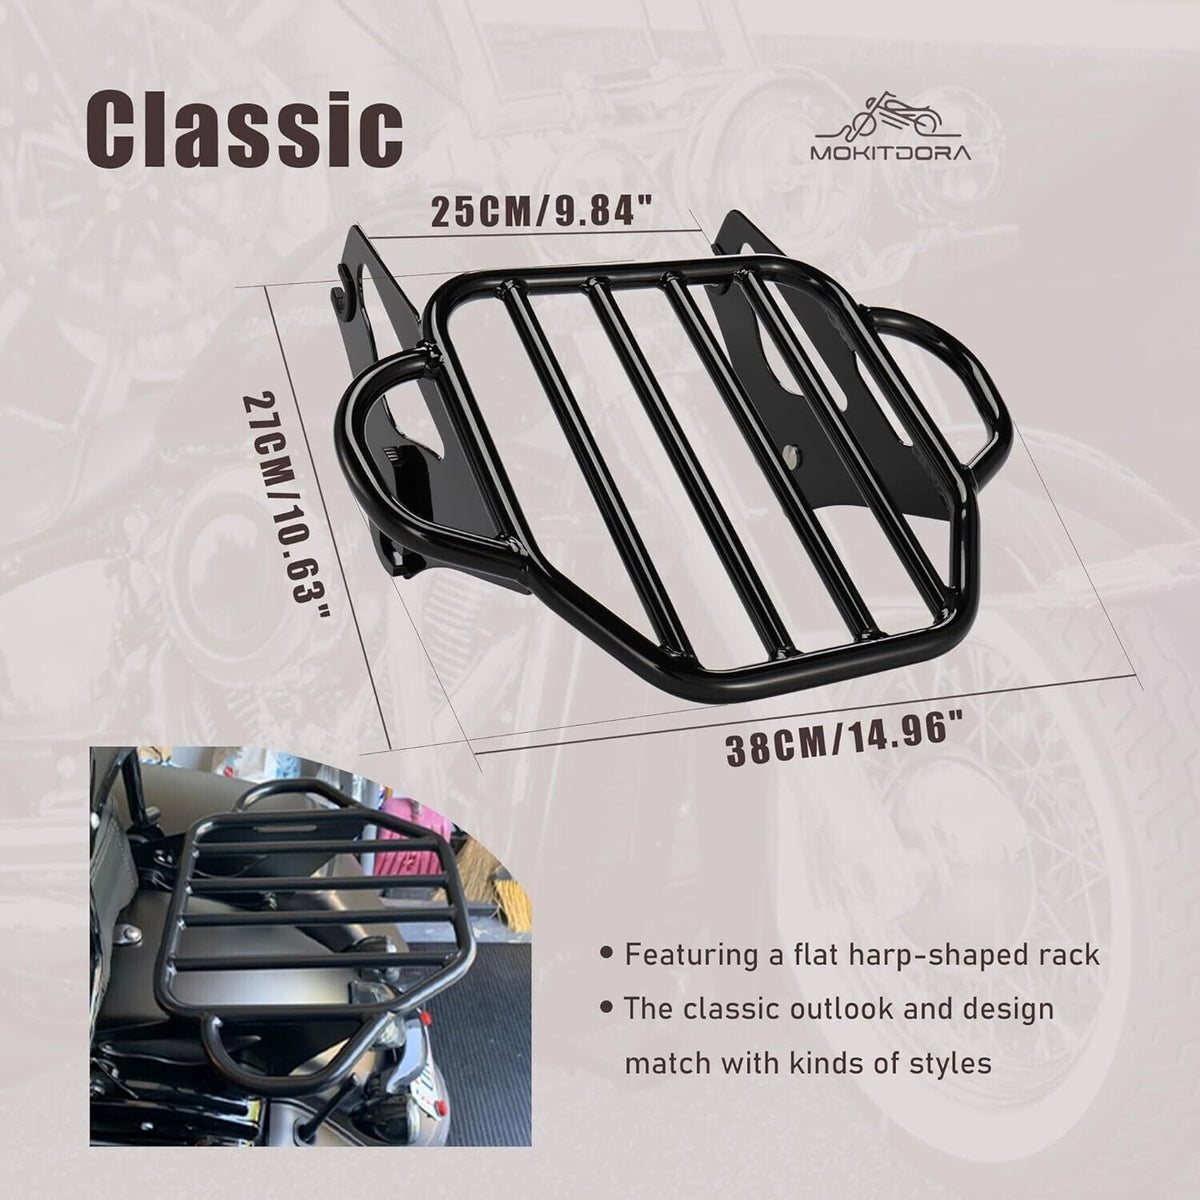 Mokitdora Detachable Two-Up Luggage Rack Mounting Rack For Harley - Davidson